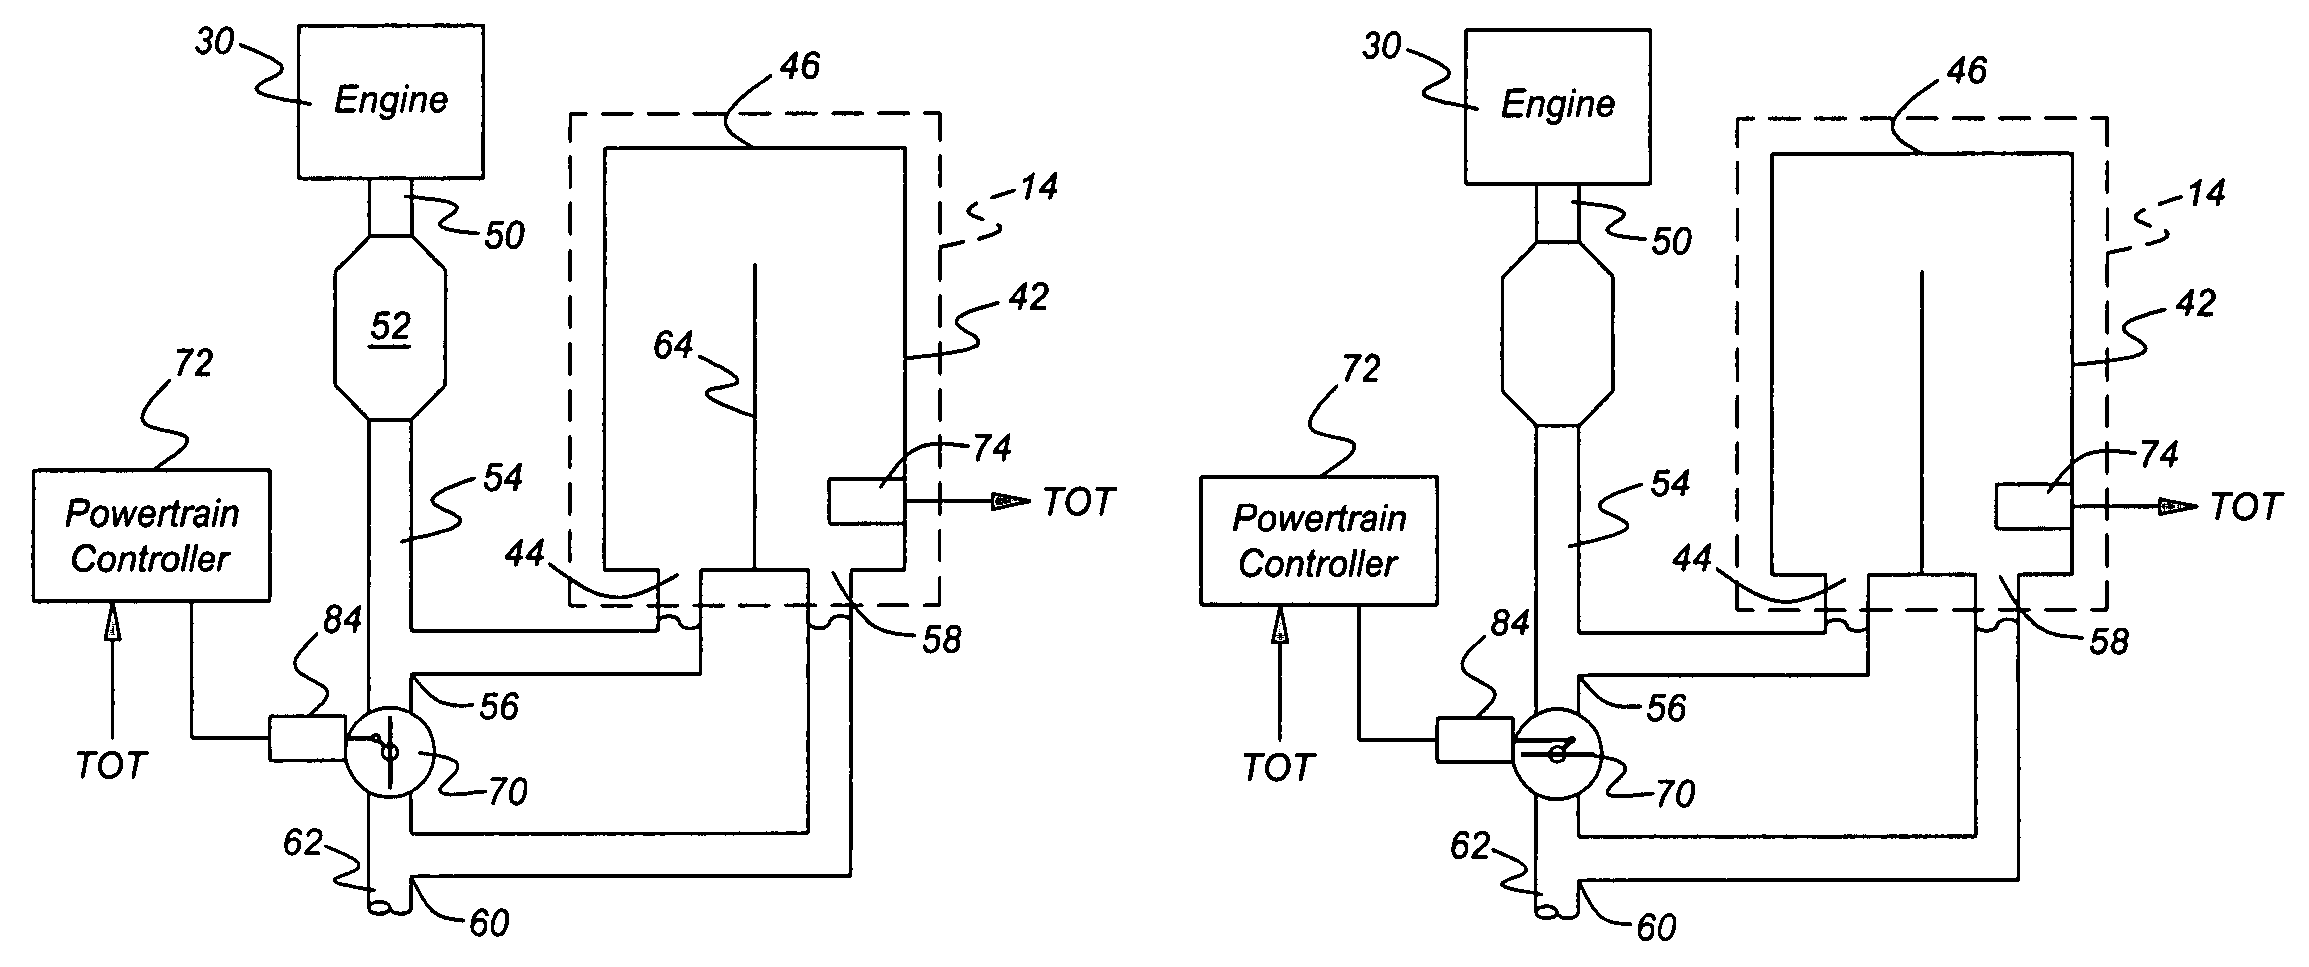 Transmission fluid heating using engine exhaust